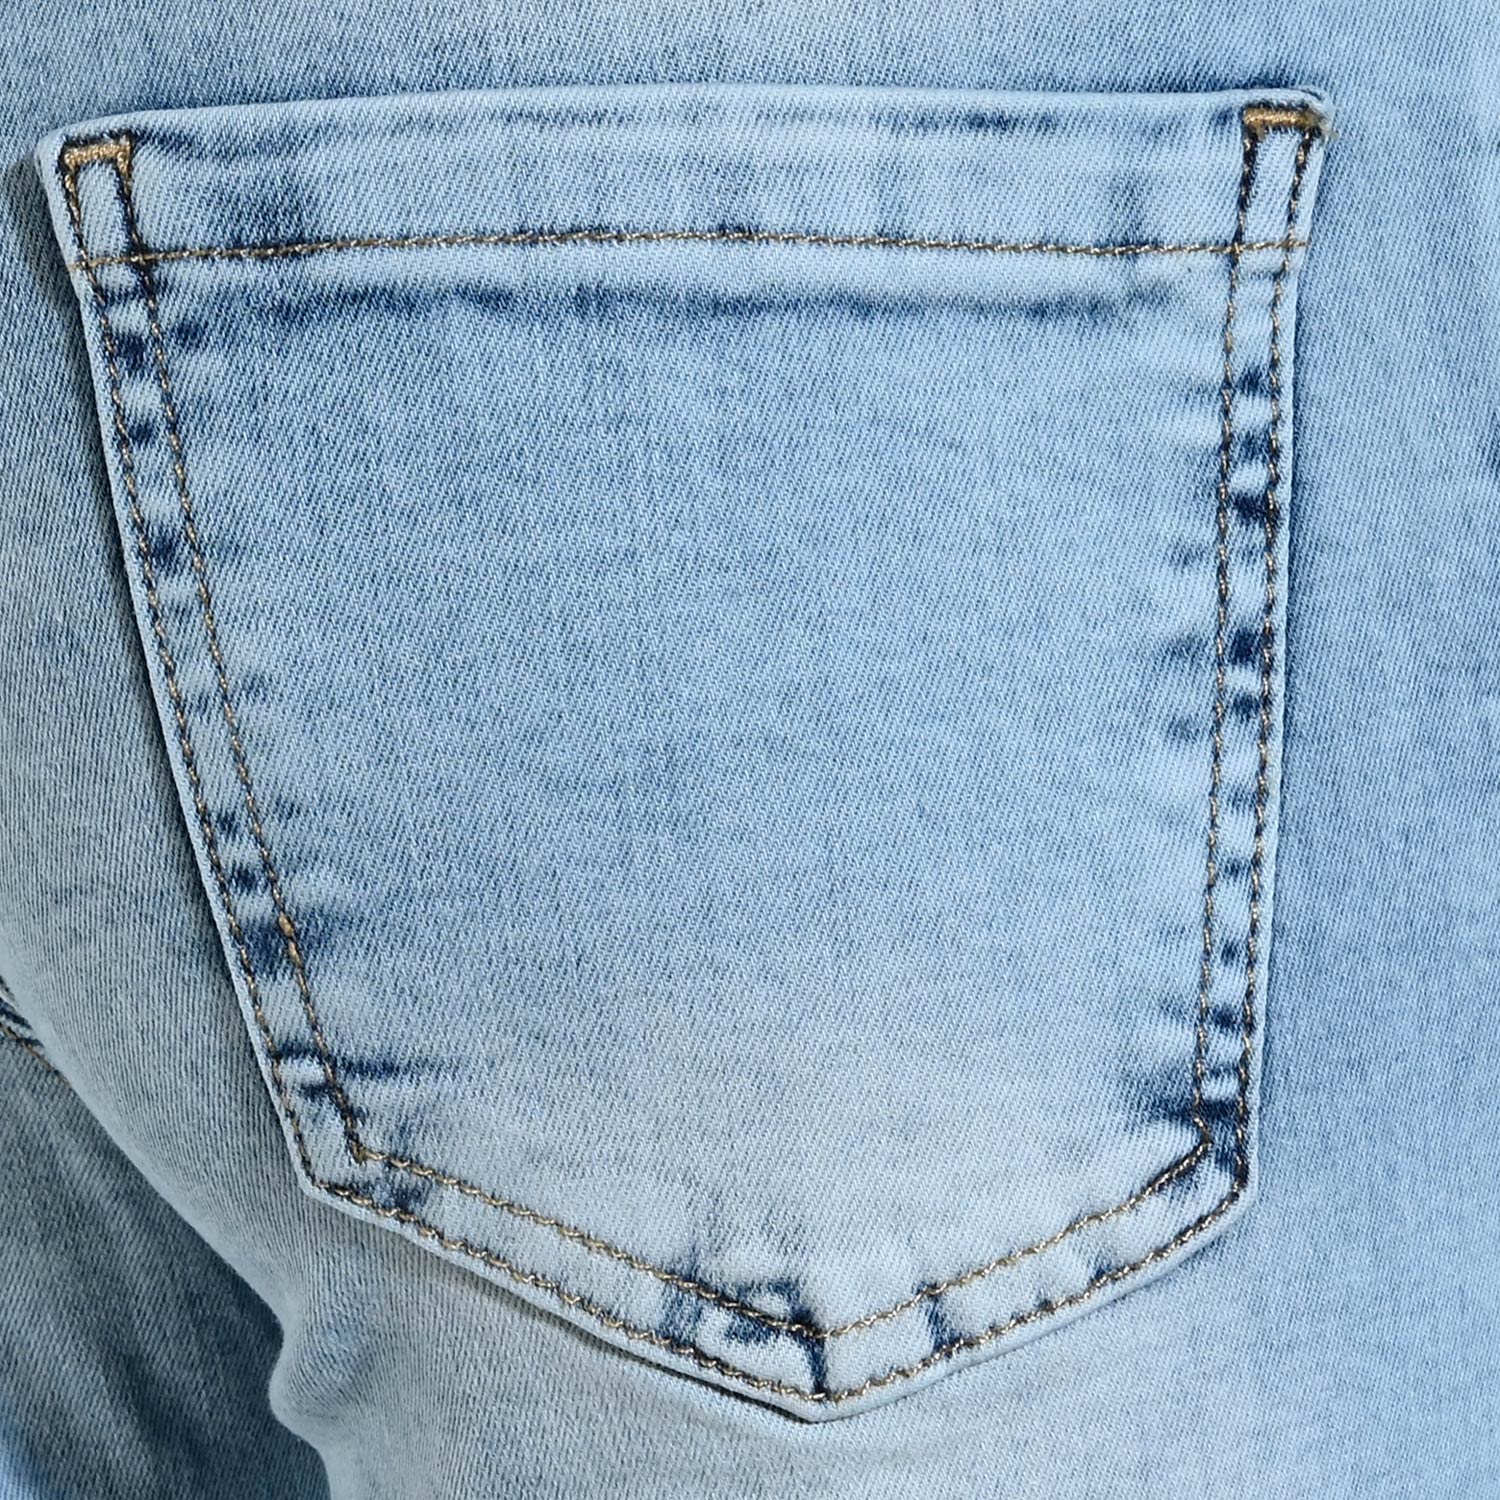 1331-Girls Wide Leg Jeans verfügbar in Slim, Normal